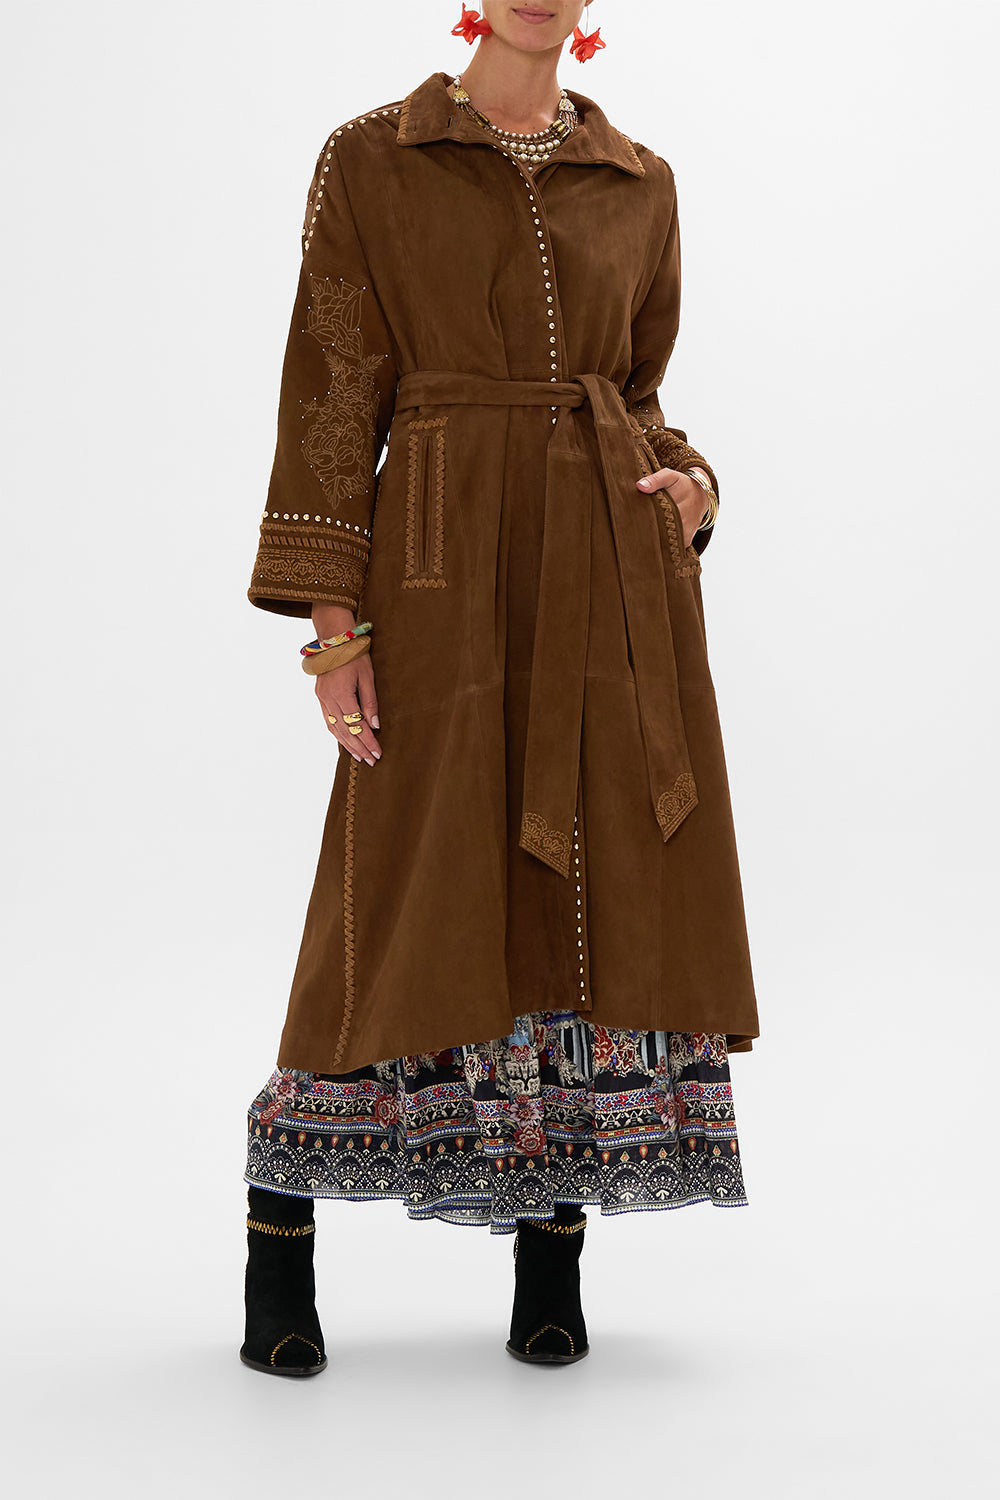 CAMILLA embroidered suede coat in Volendam Dolls print